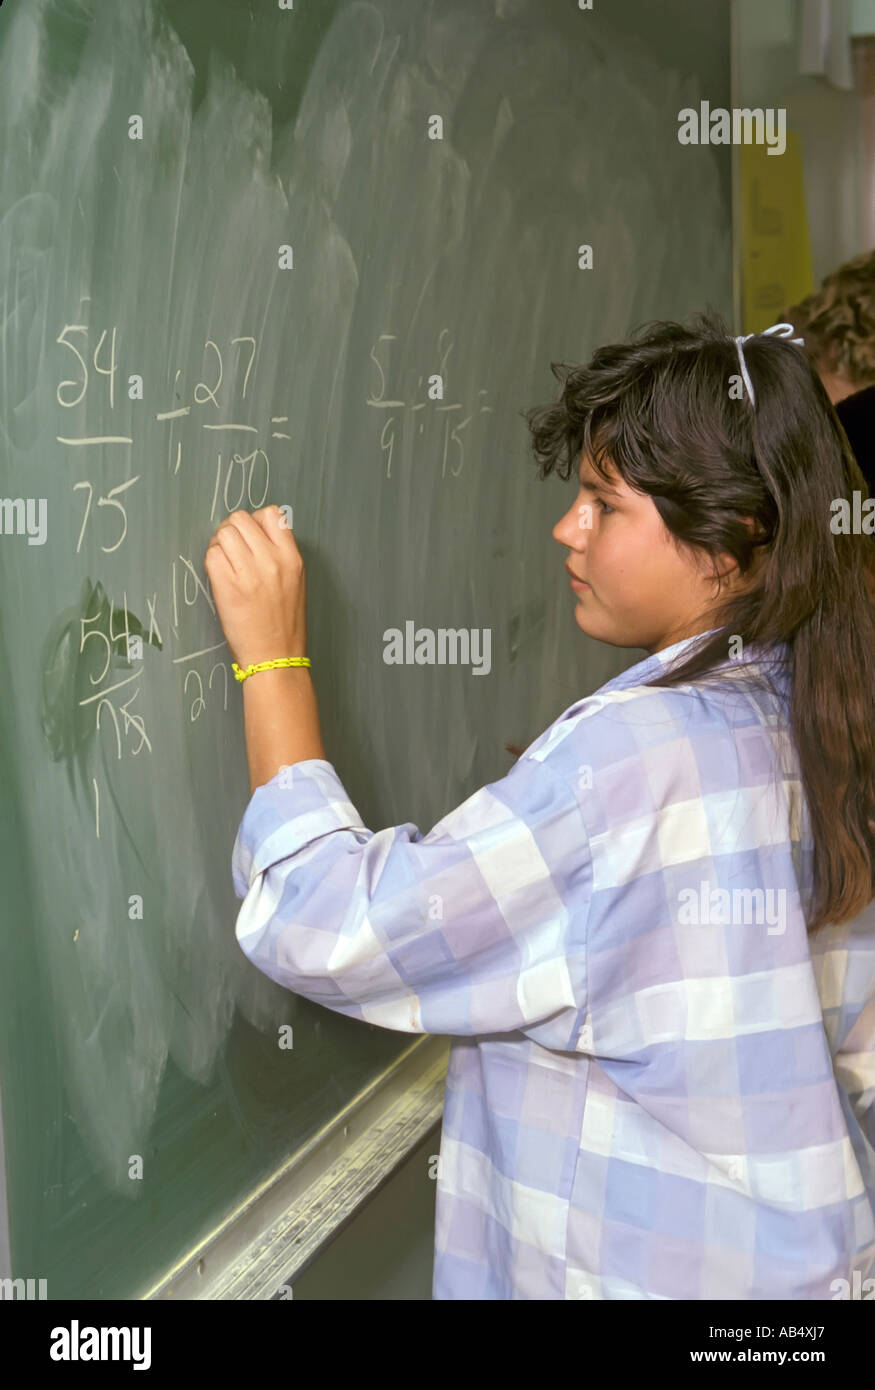 Hispanic Latino female student works on math problems on the blackboard during class Stock Photo